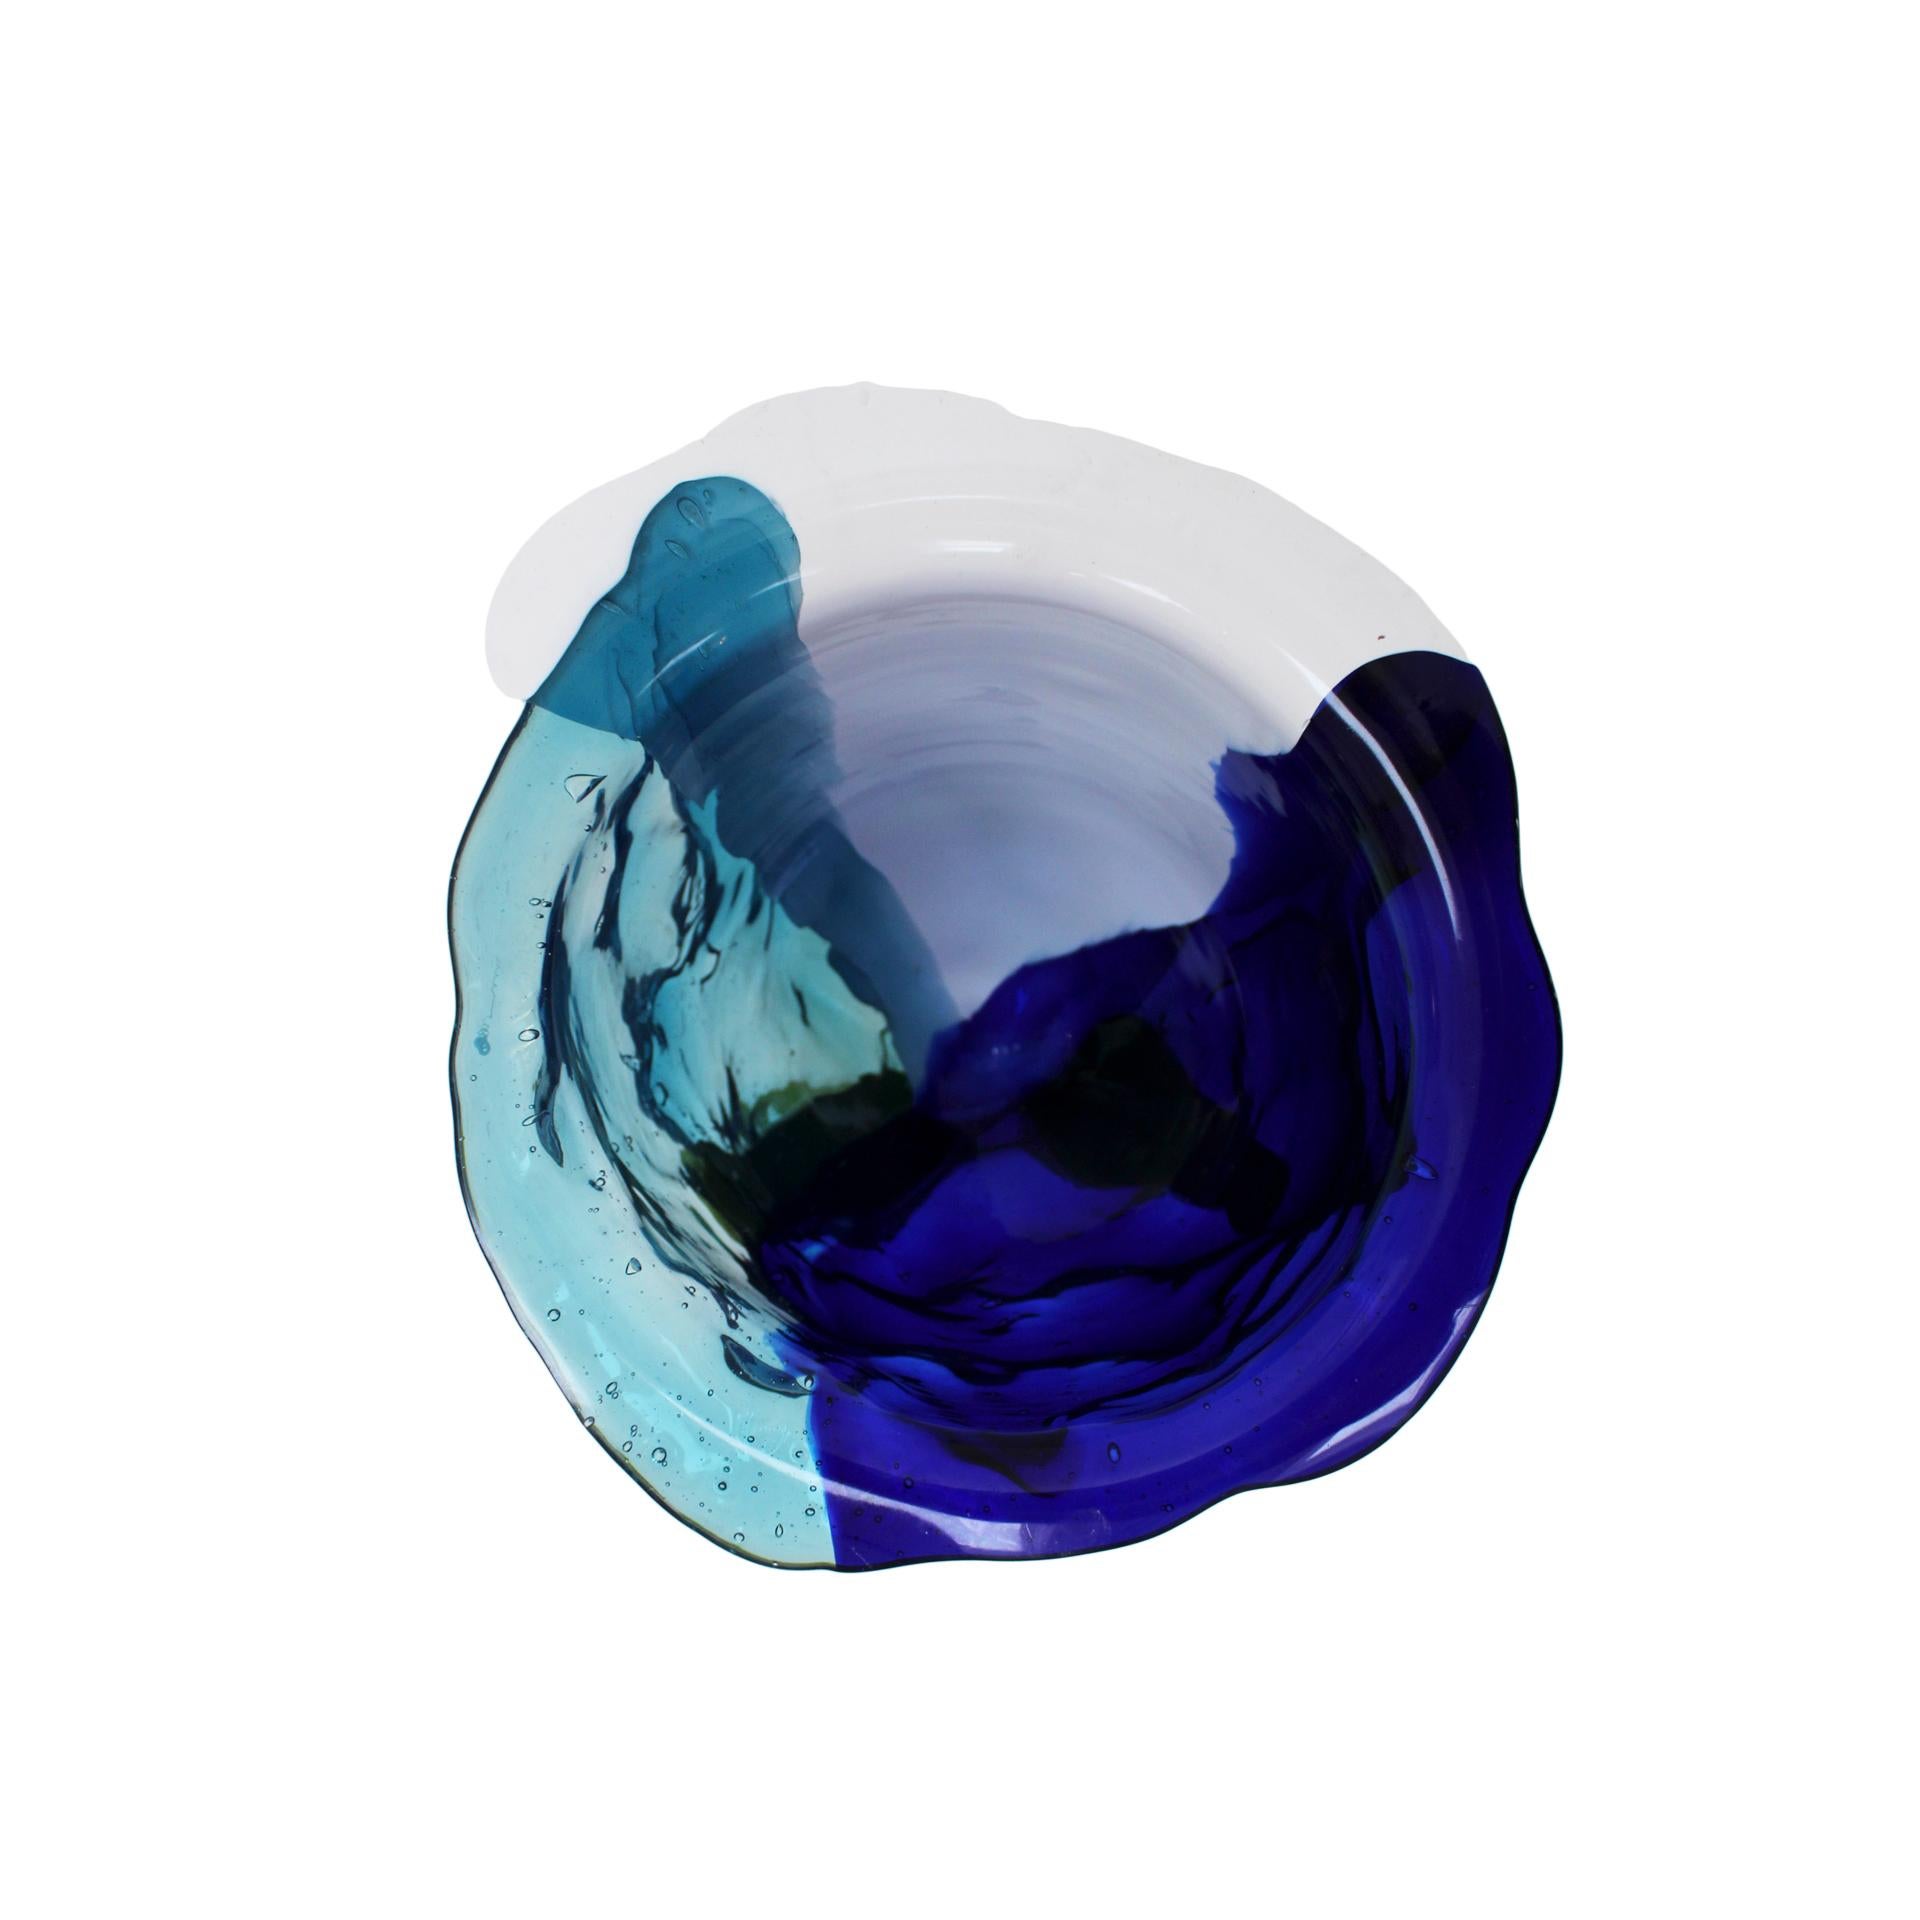 Italian Contemporary Vase Designed by Gaetano Pesce in 1995 for Fish Design, Italy, 2022